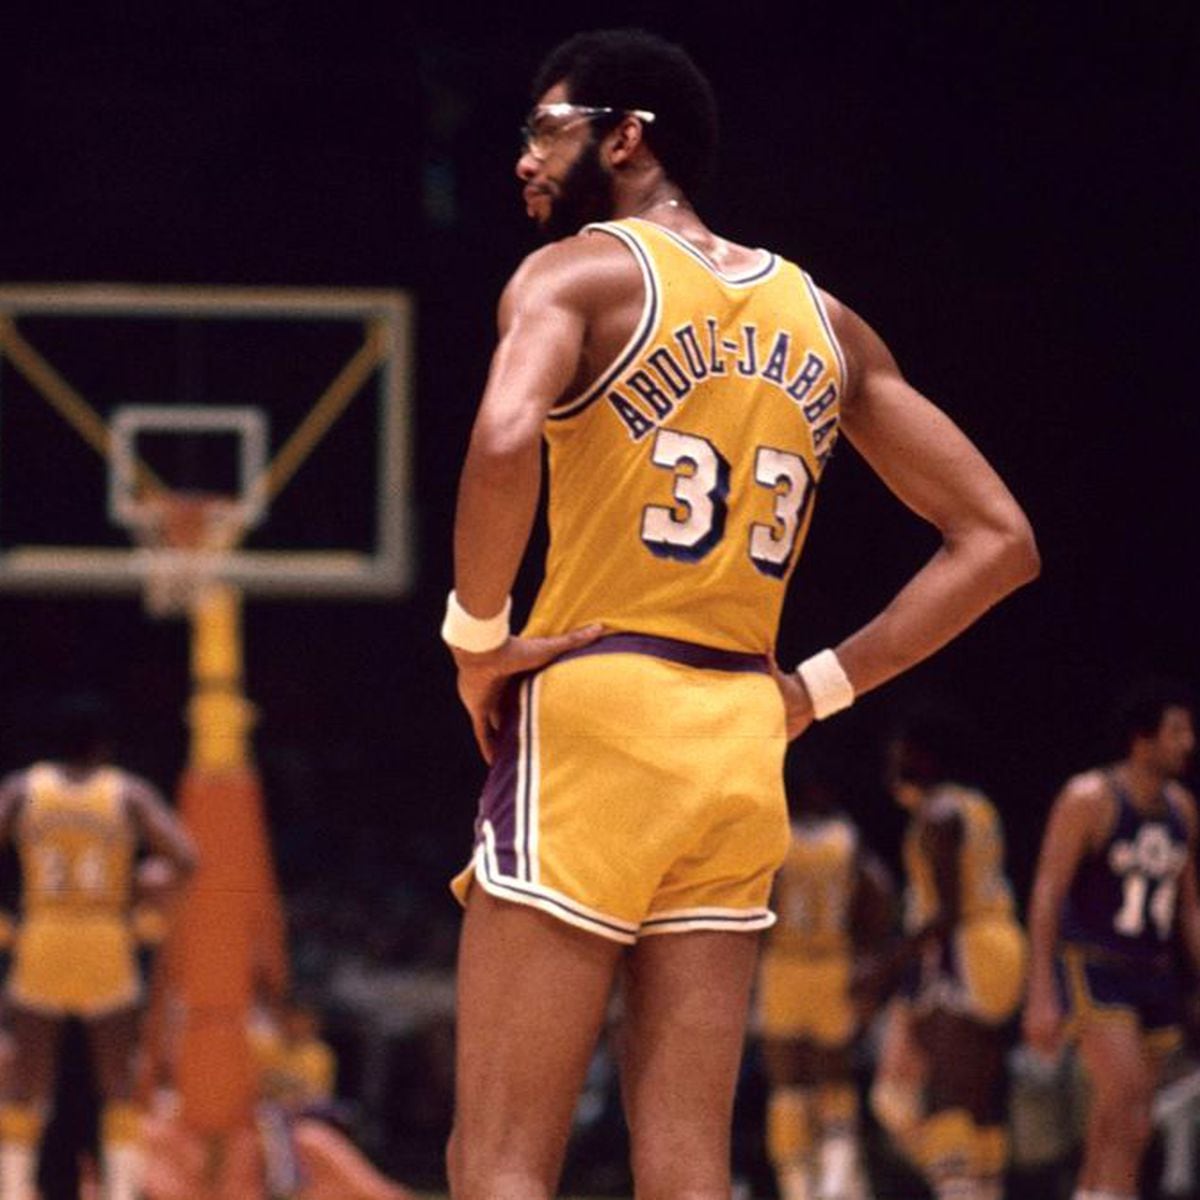 Lebron James Tribute Special Jersey La Lakers Kareem Abdul-Jabbar